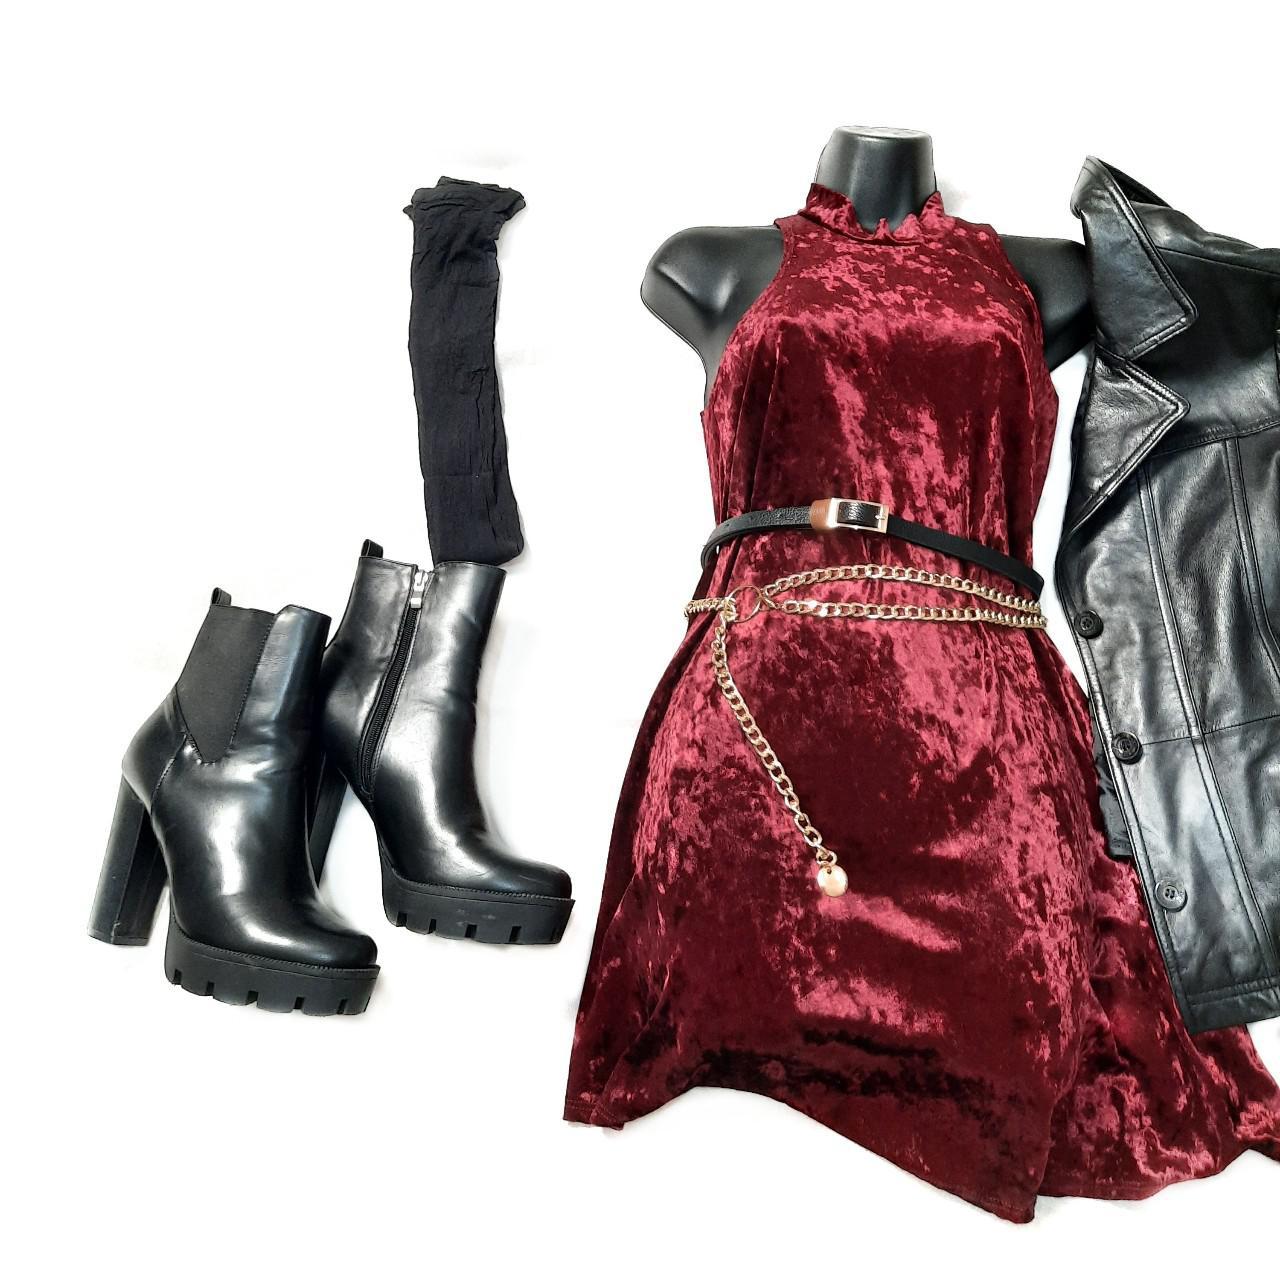 Product Image 3 - Fall Favorites
*
Red velvet dress, size